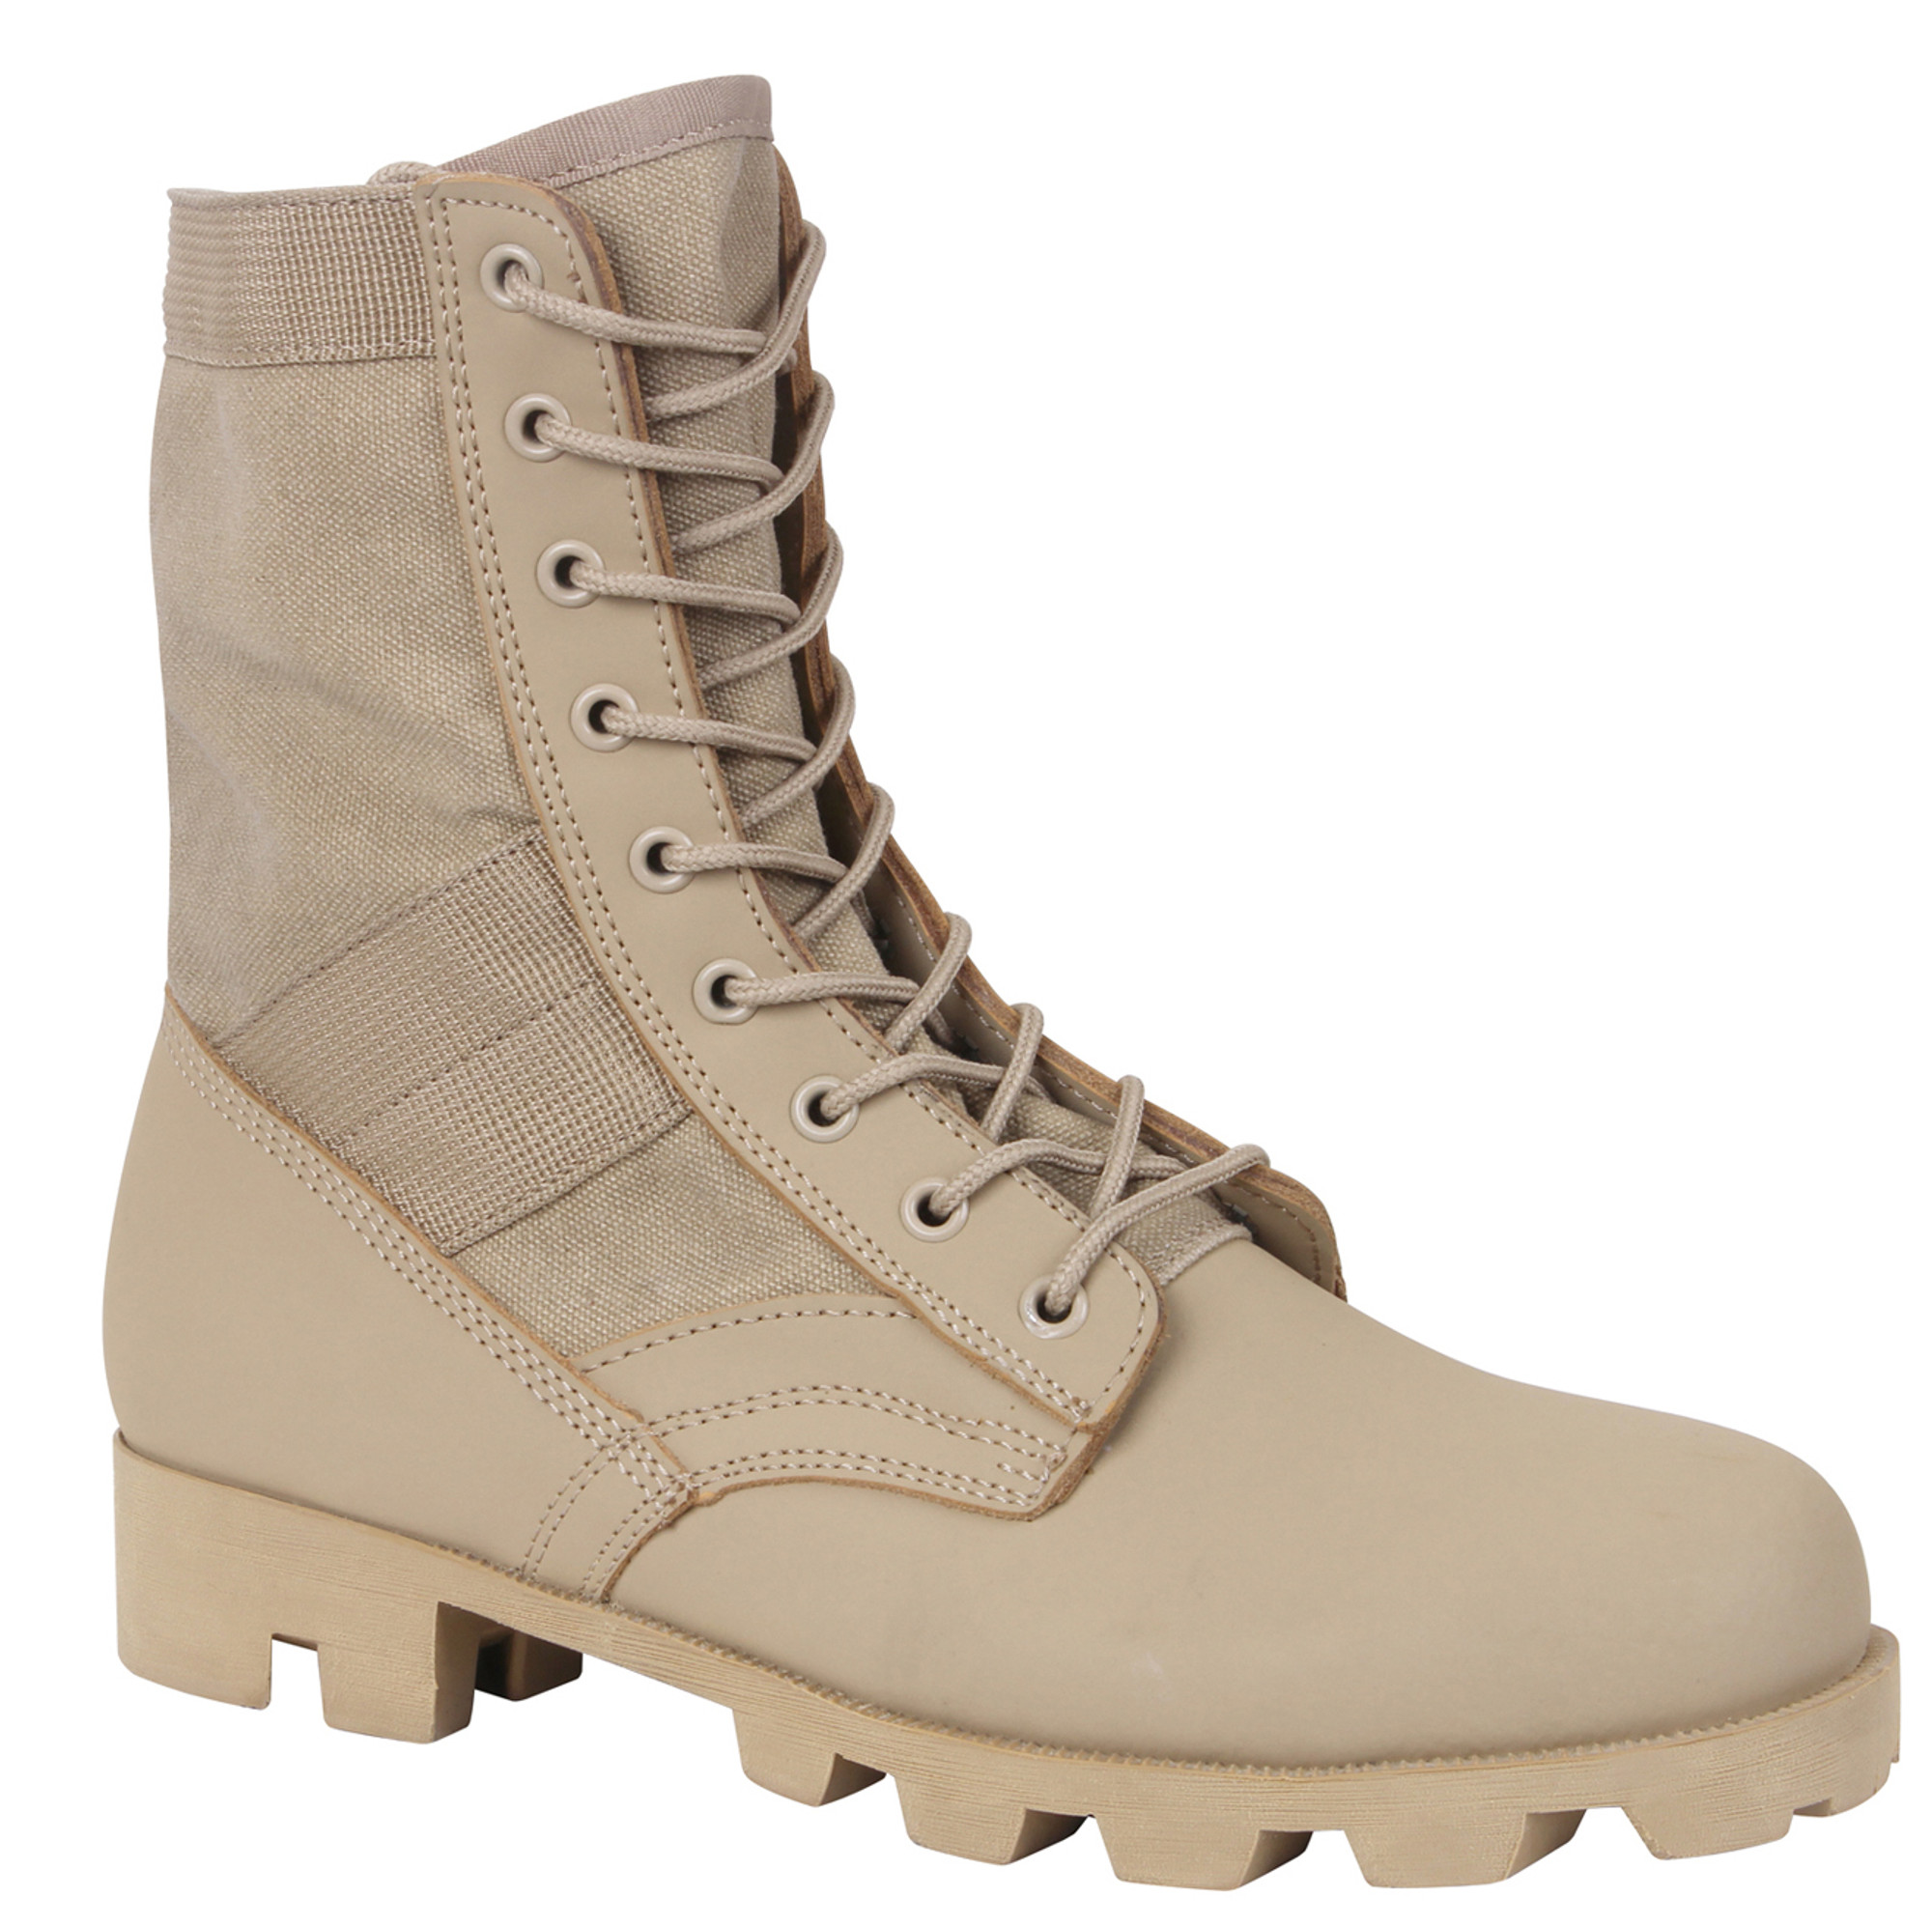 Rothco Military Jungle Boots - 8 " - Desert Tan